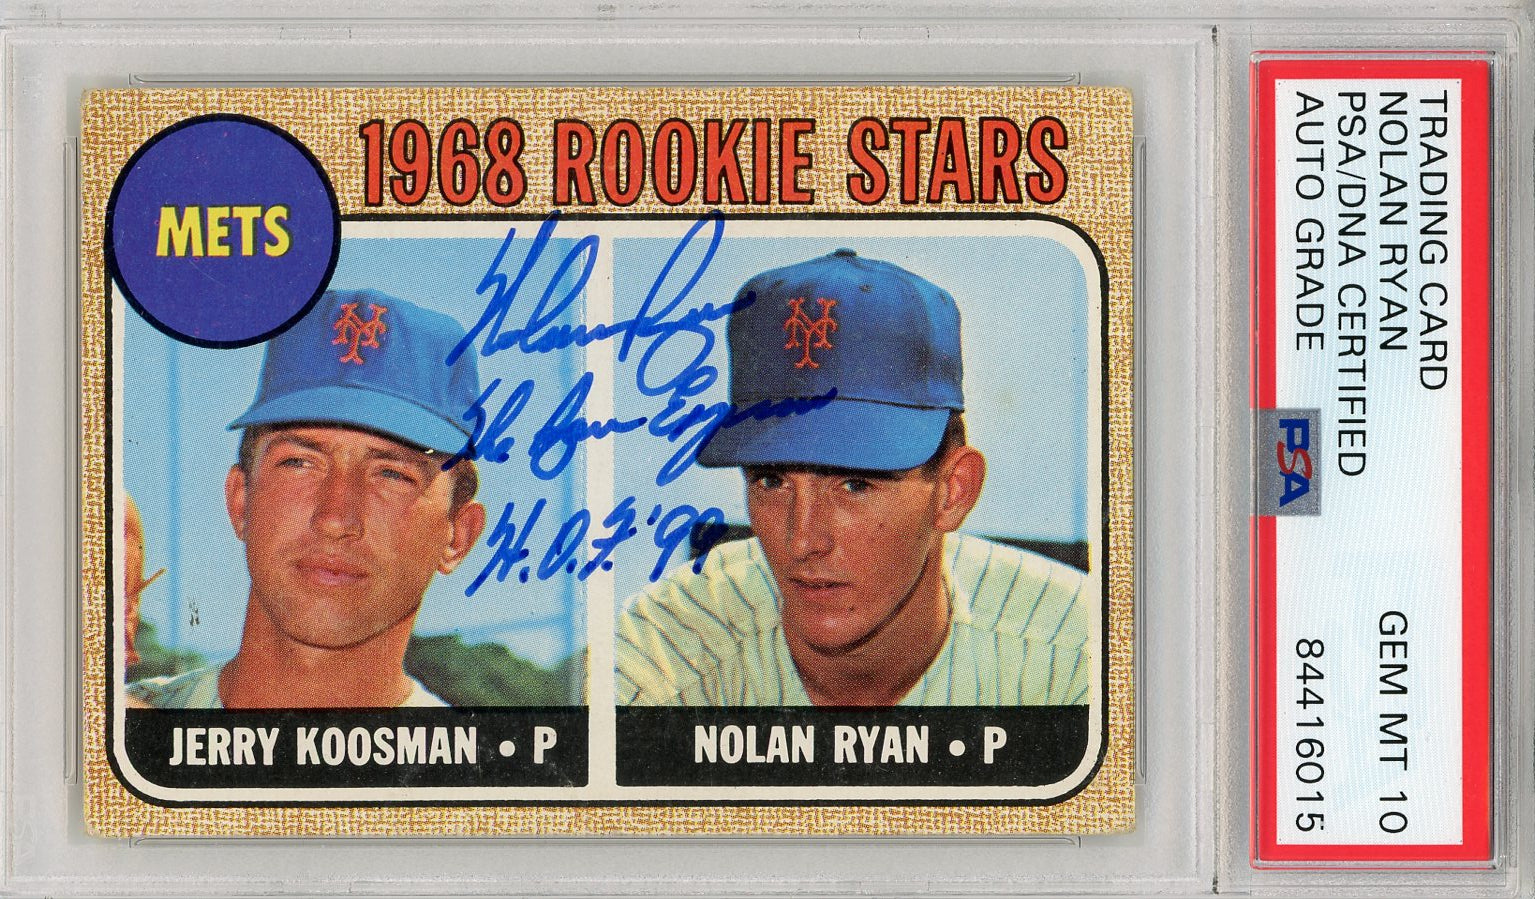 Nolan Ryan Hand Signed Baseball with HOF 99 Inscription